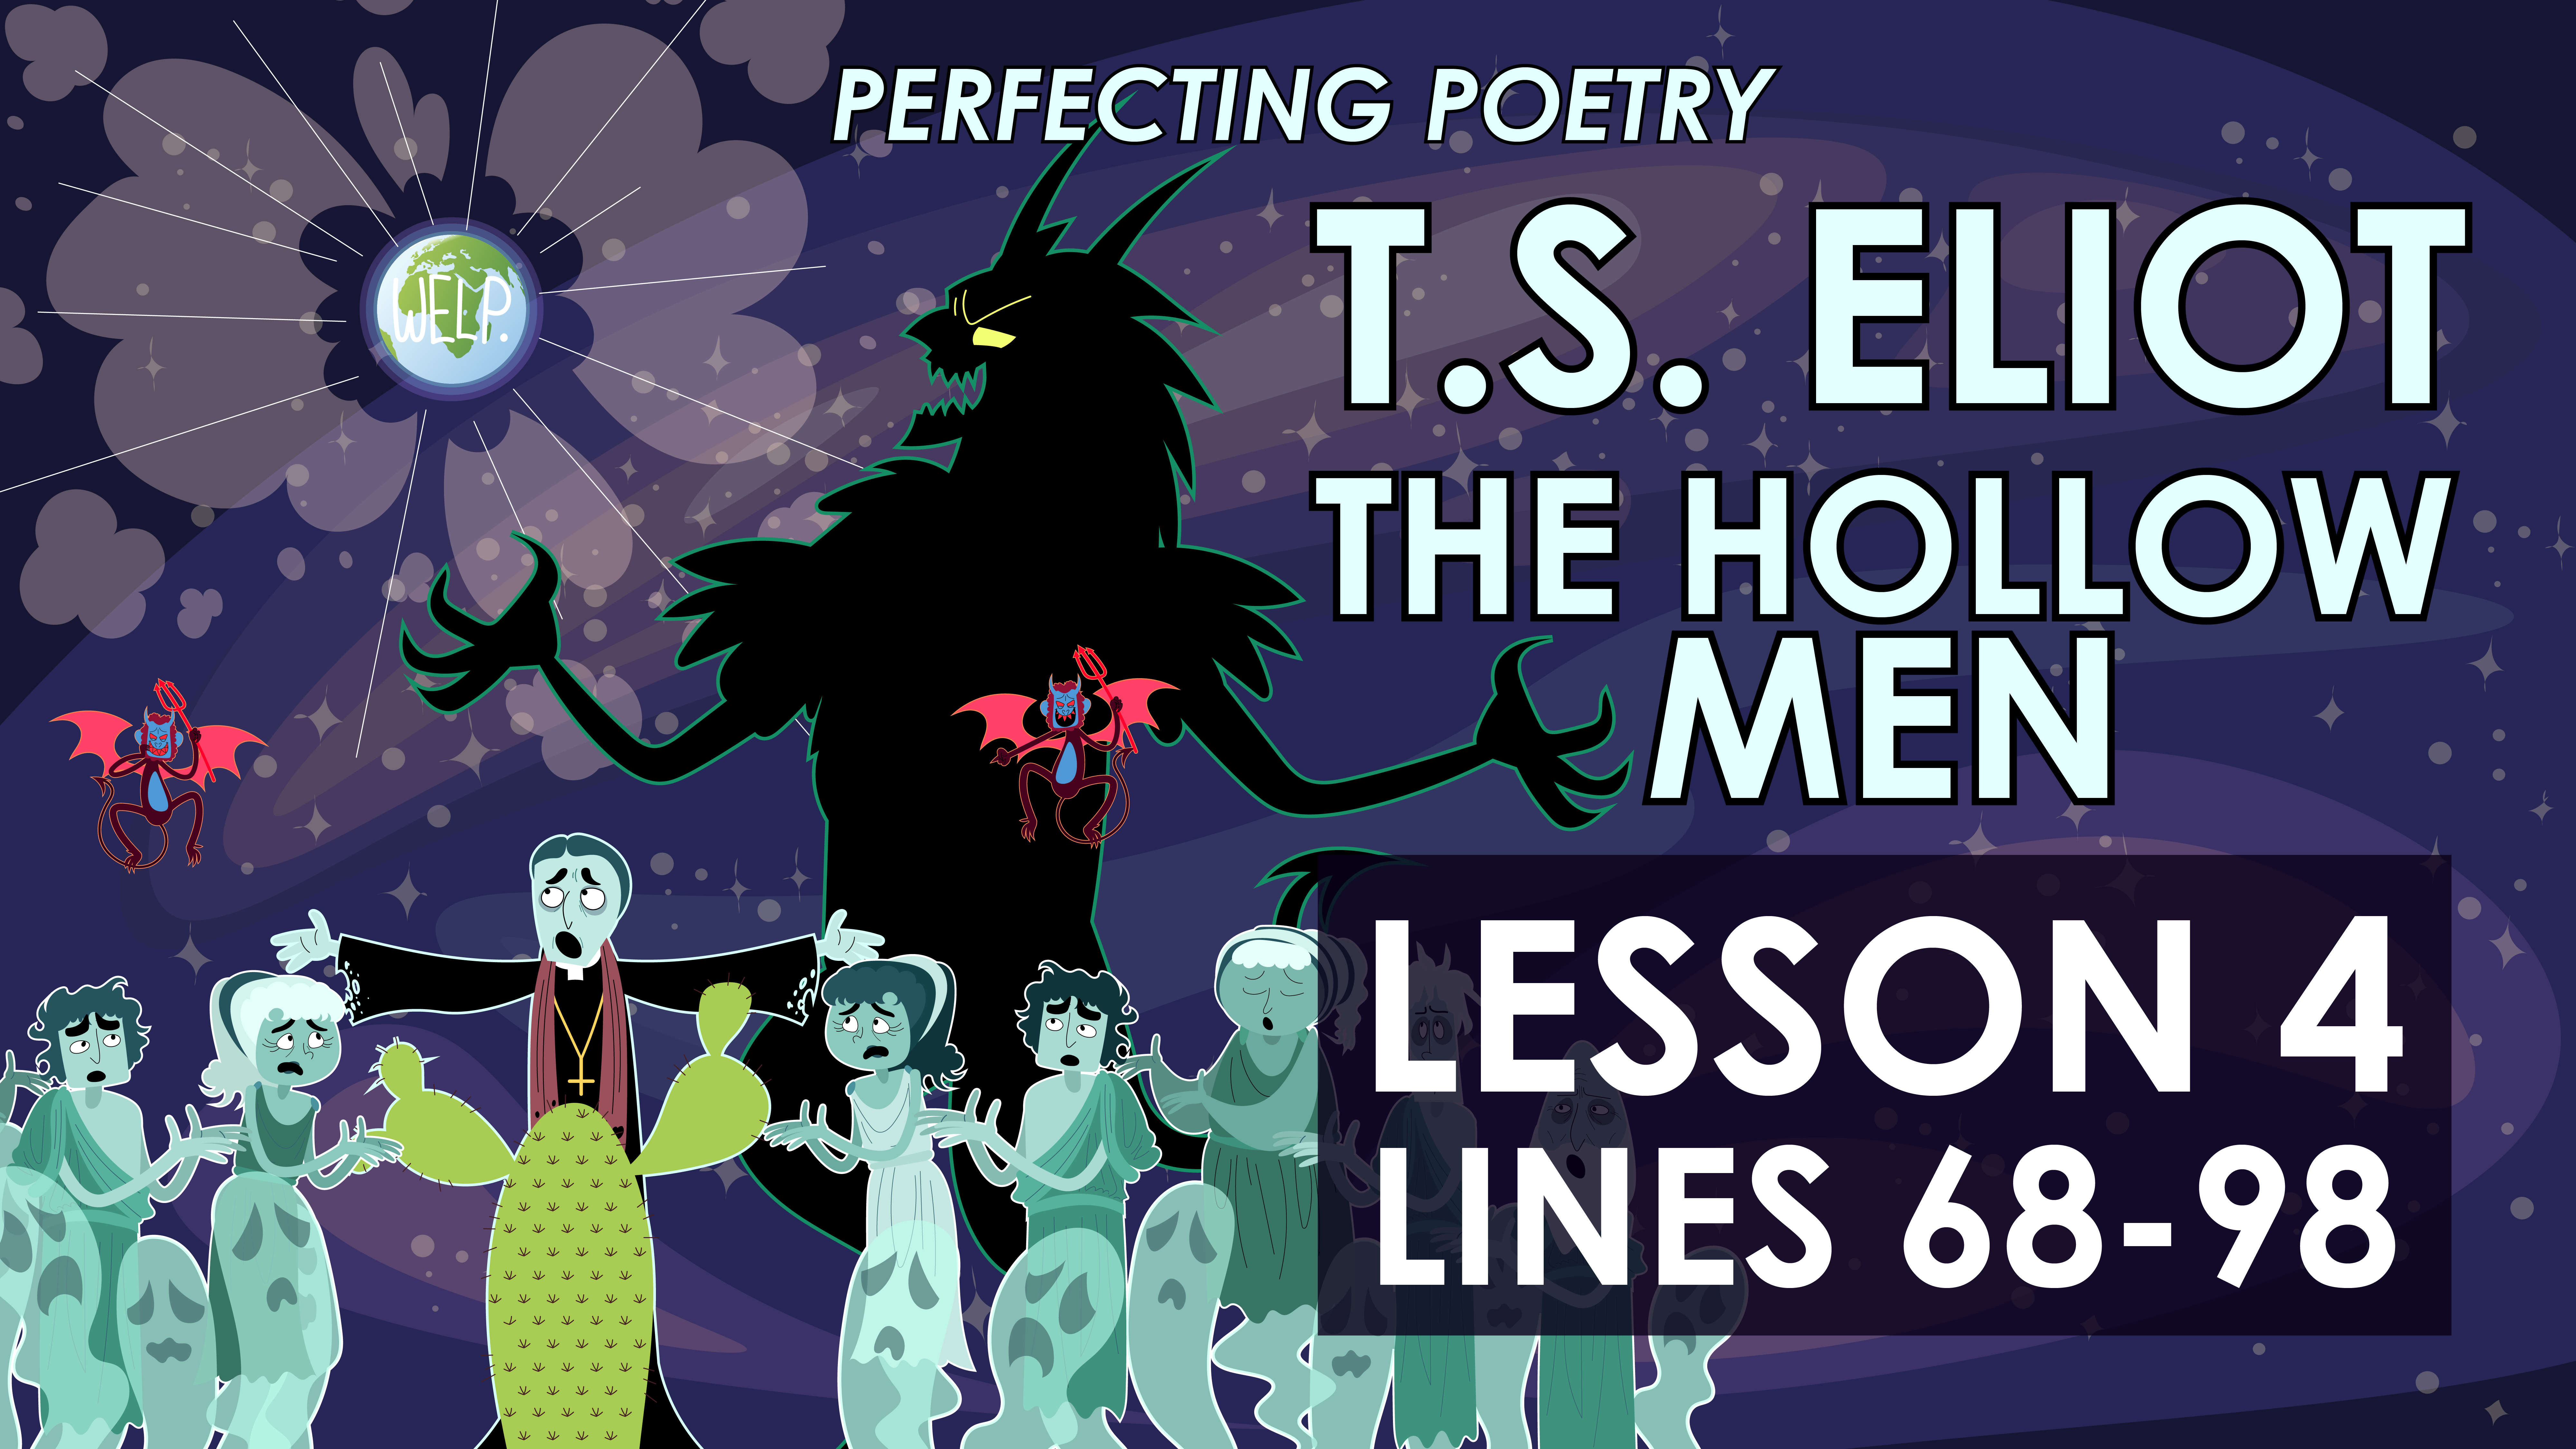 The Hollow Men - Lines 68-98 - T.S. Eliot - Perfecting Poetry